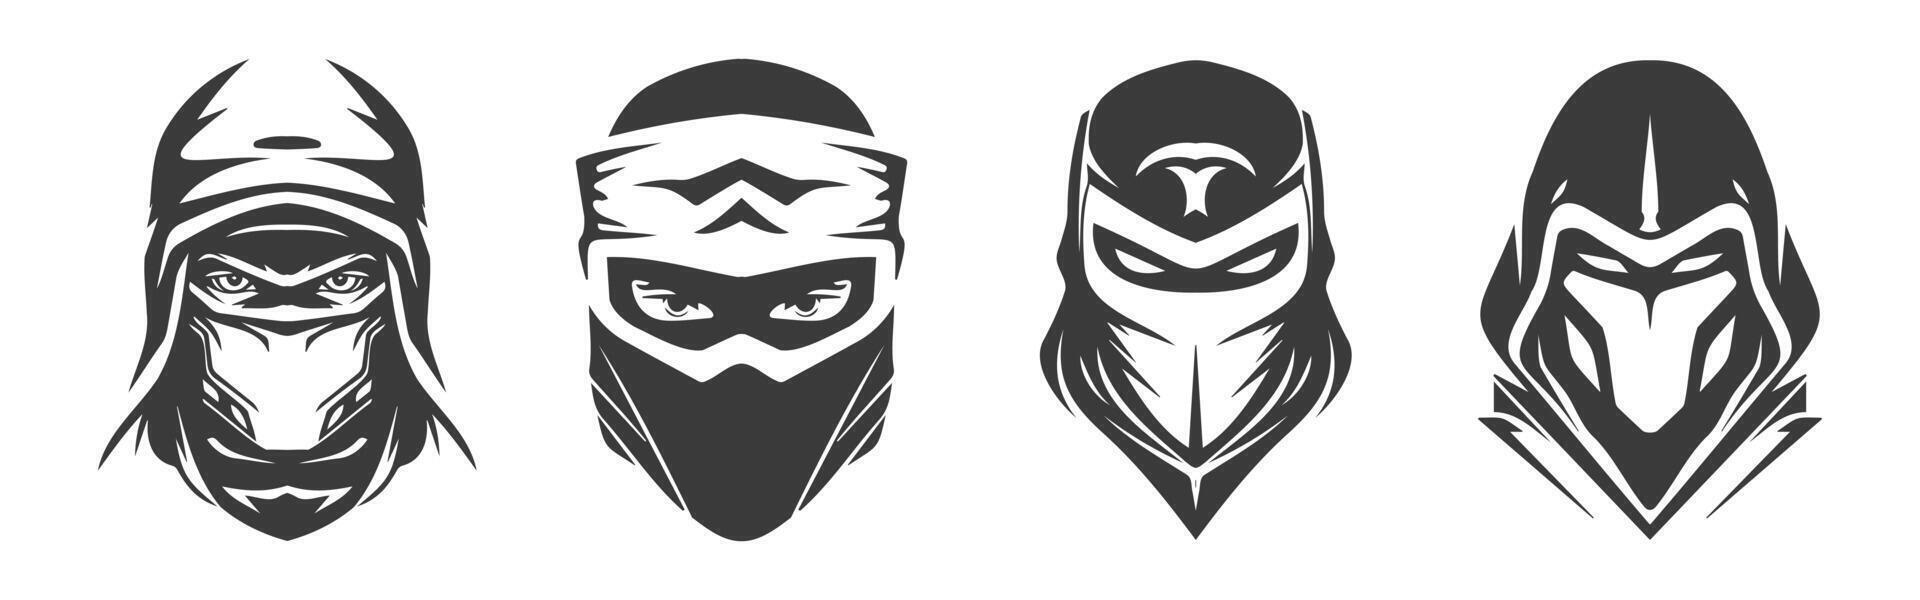 ninja testa nero logo genere design impostato vettore